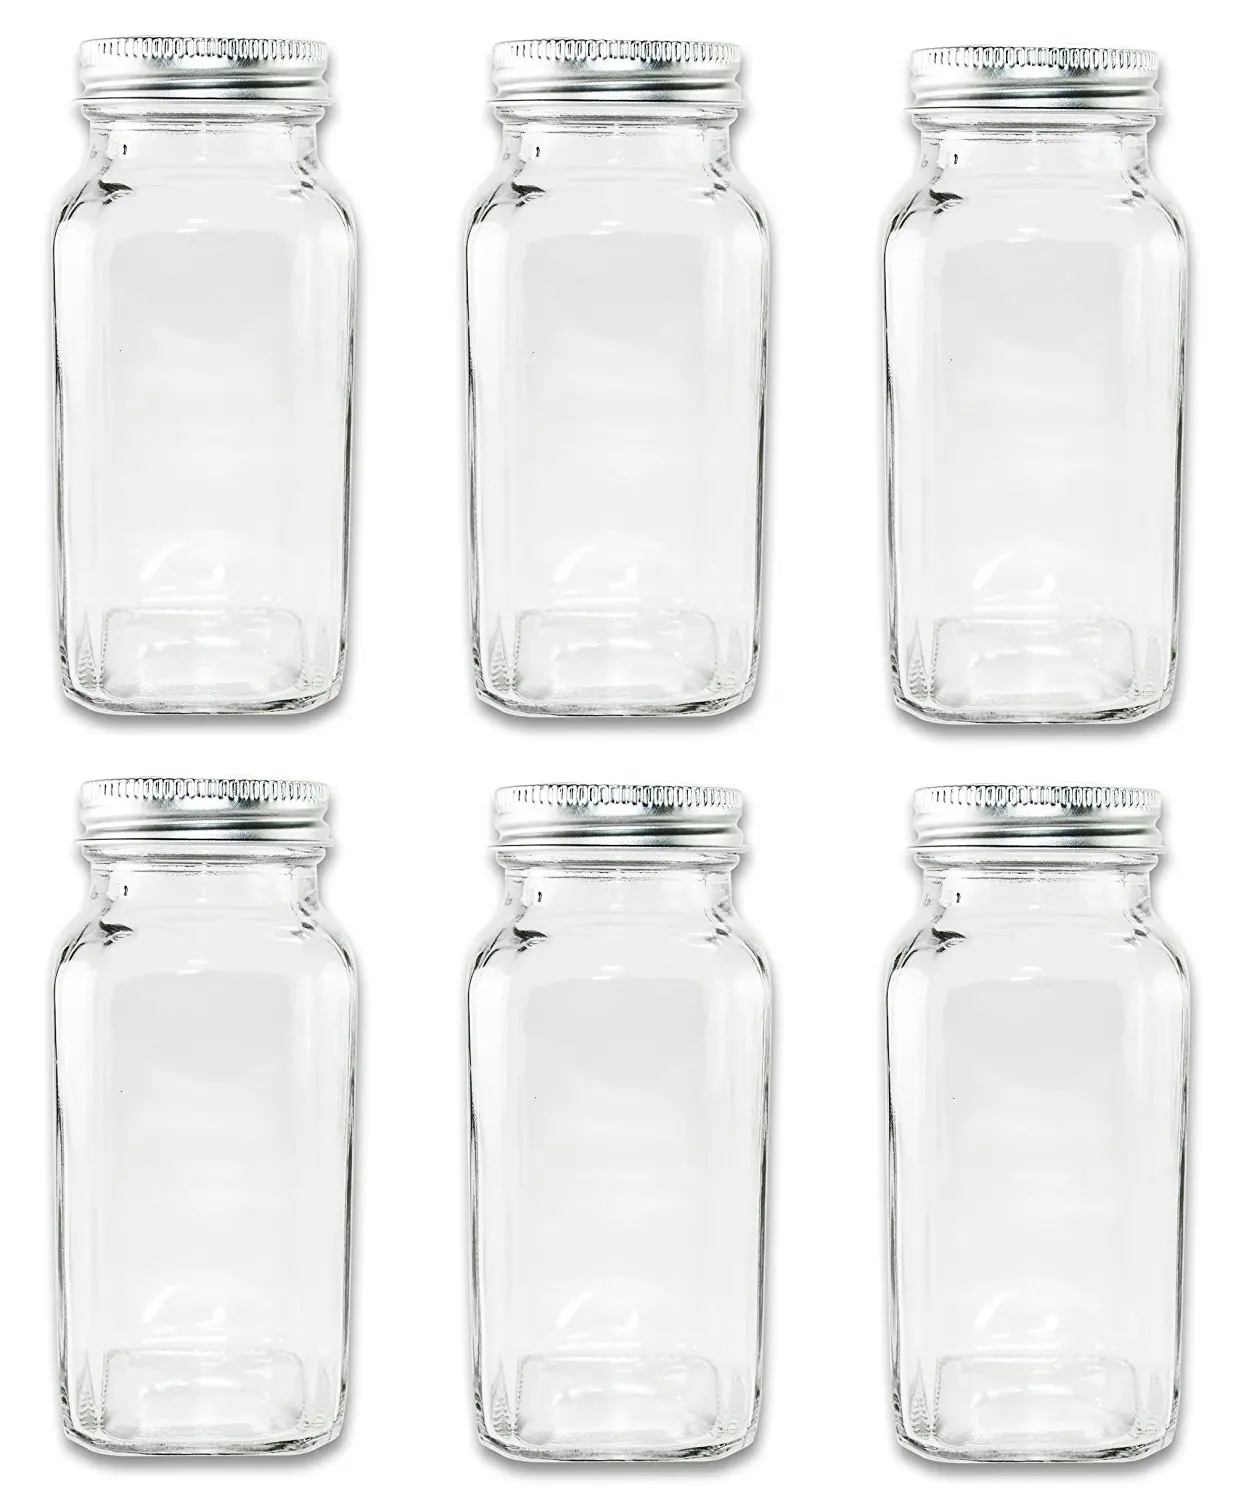 6 oz glass spice jars